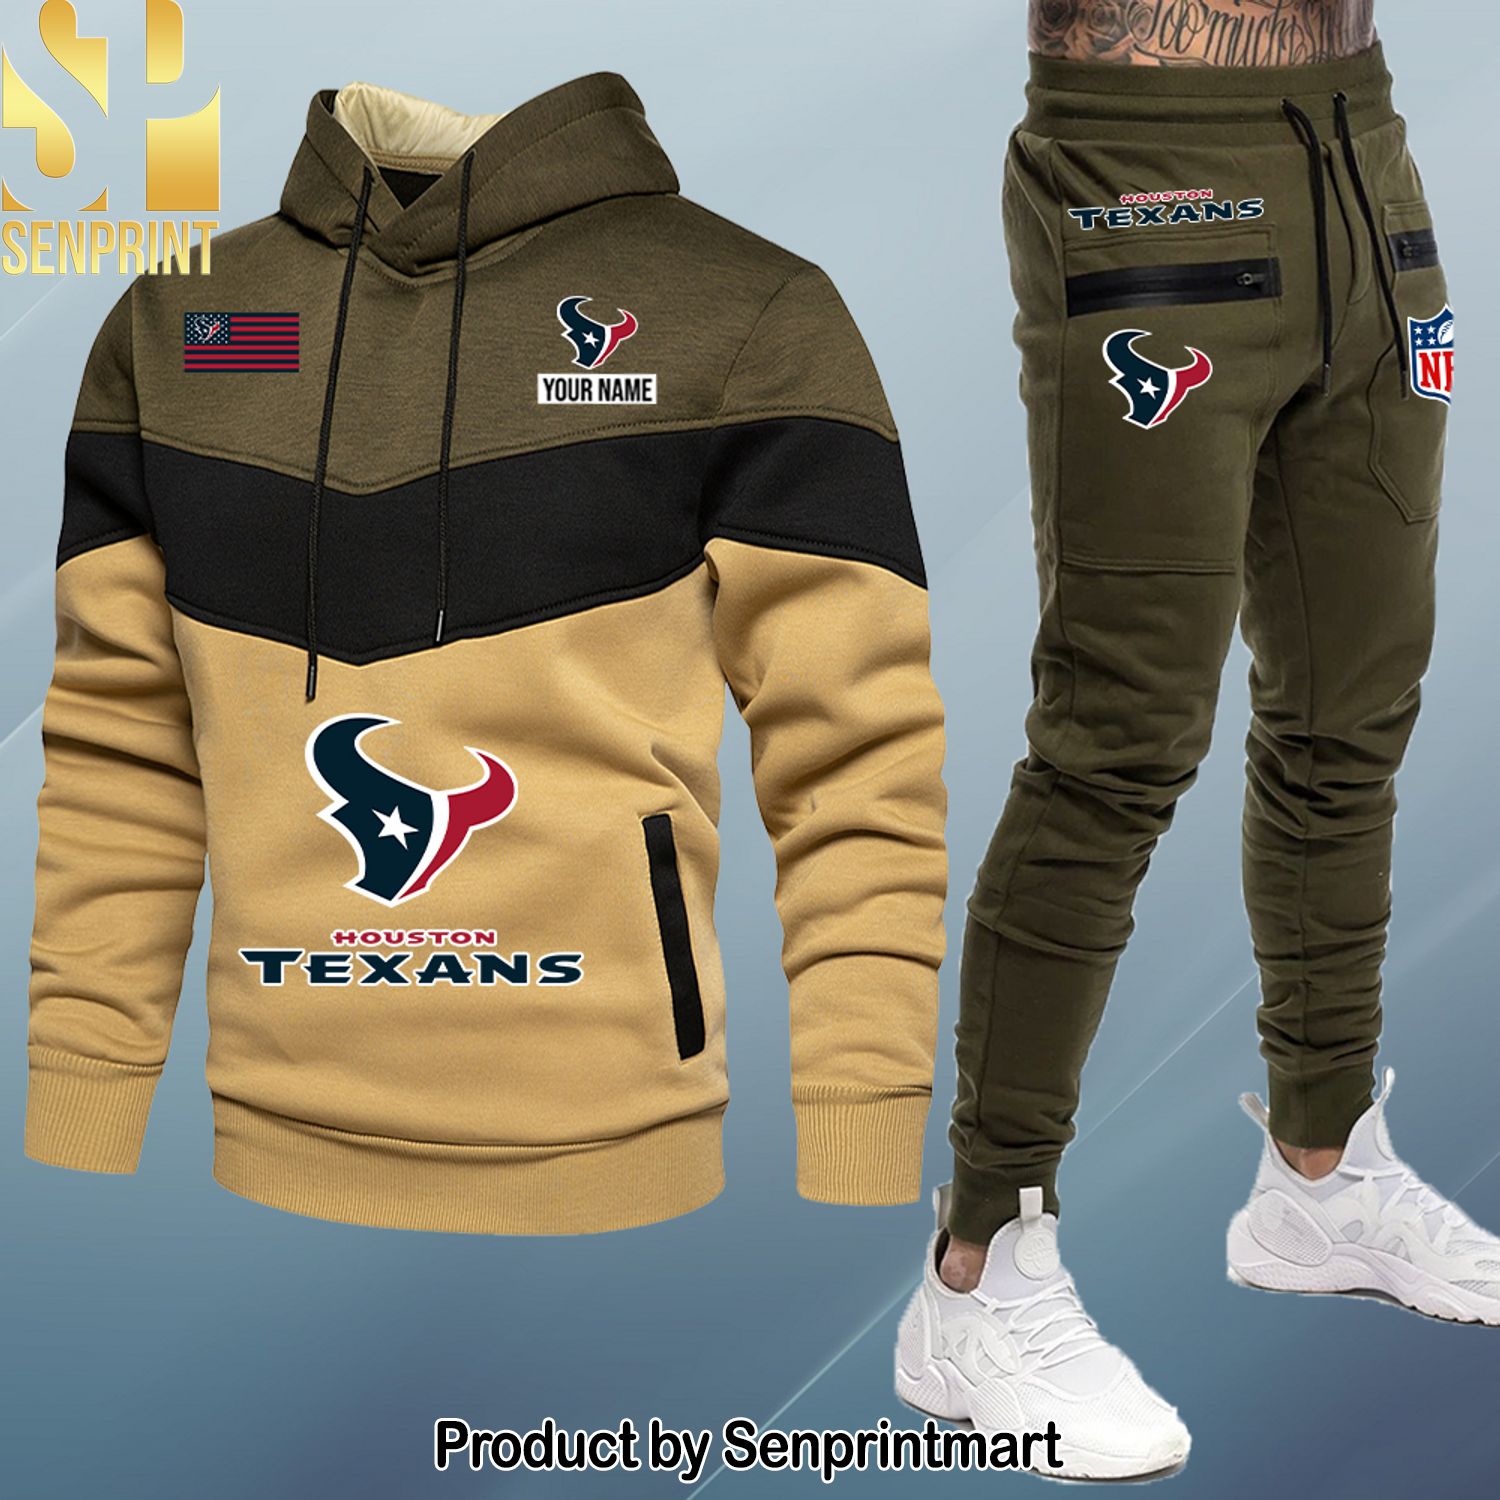 Houston Texans High Fashion Shirt and Pants